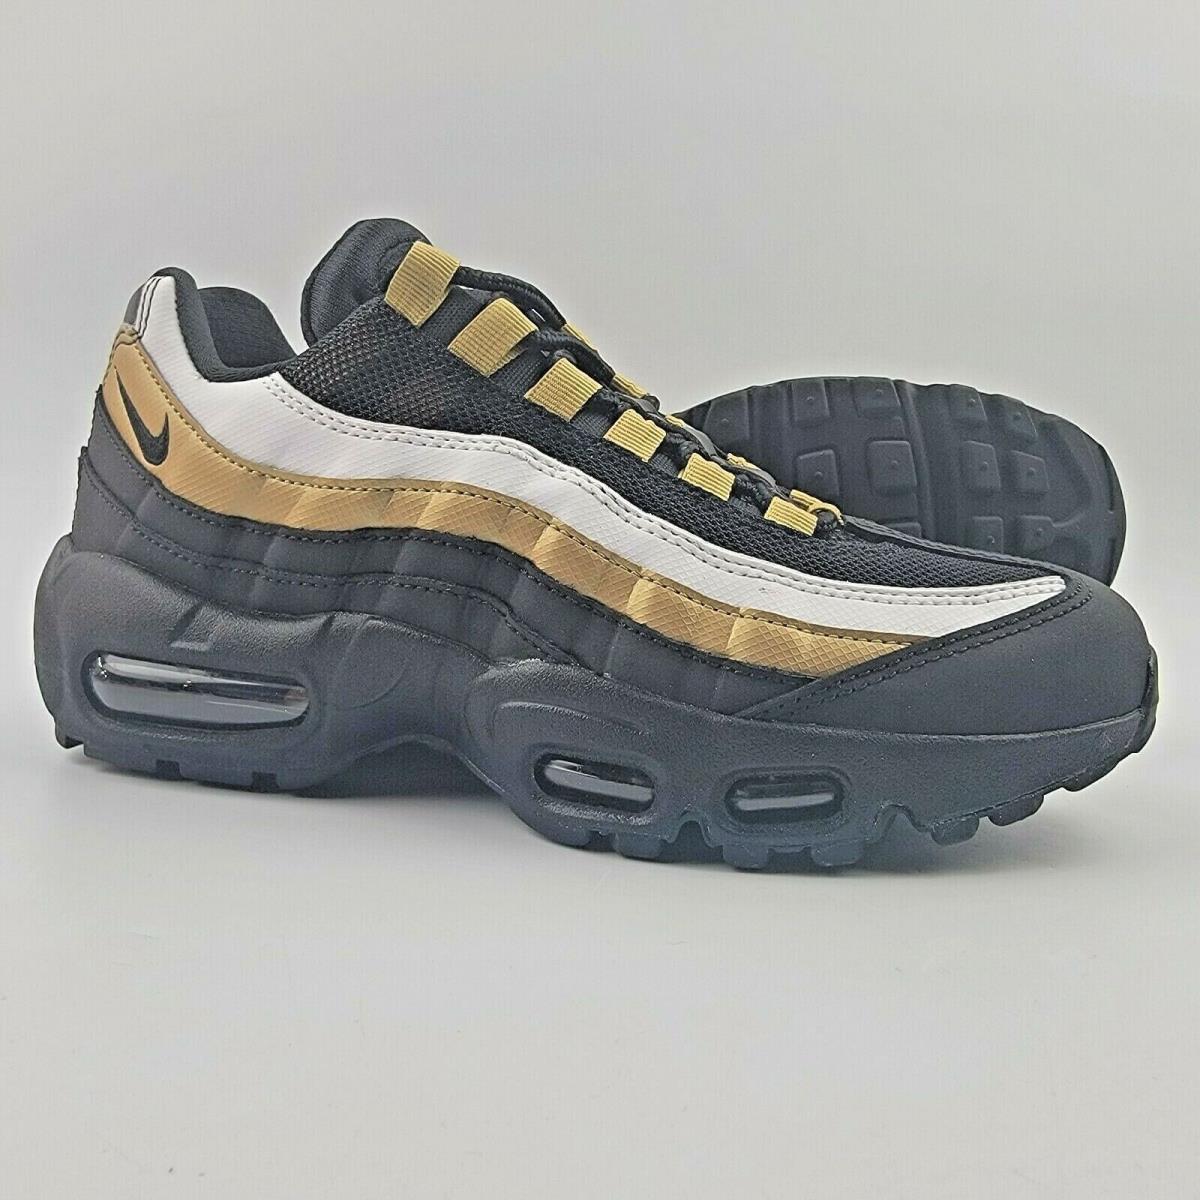 Nike Air Max 95 OG Running Shoes Black Gold AT2865-002 Mens 7.5 Womens 9